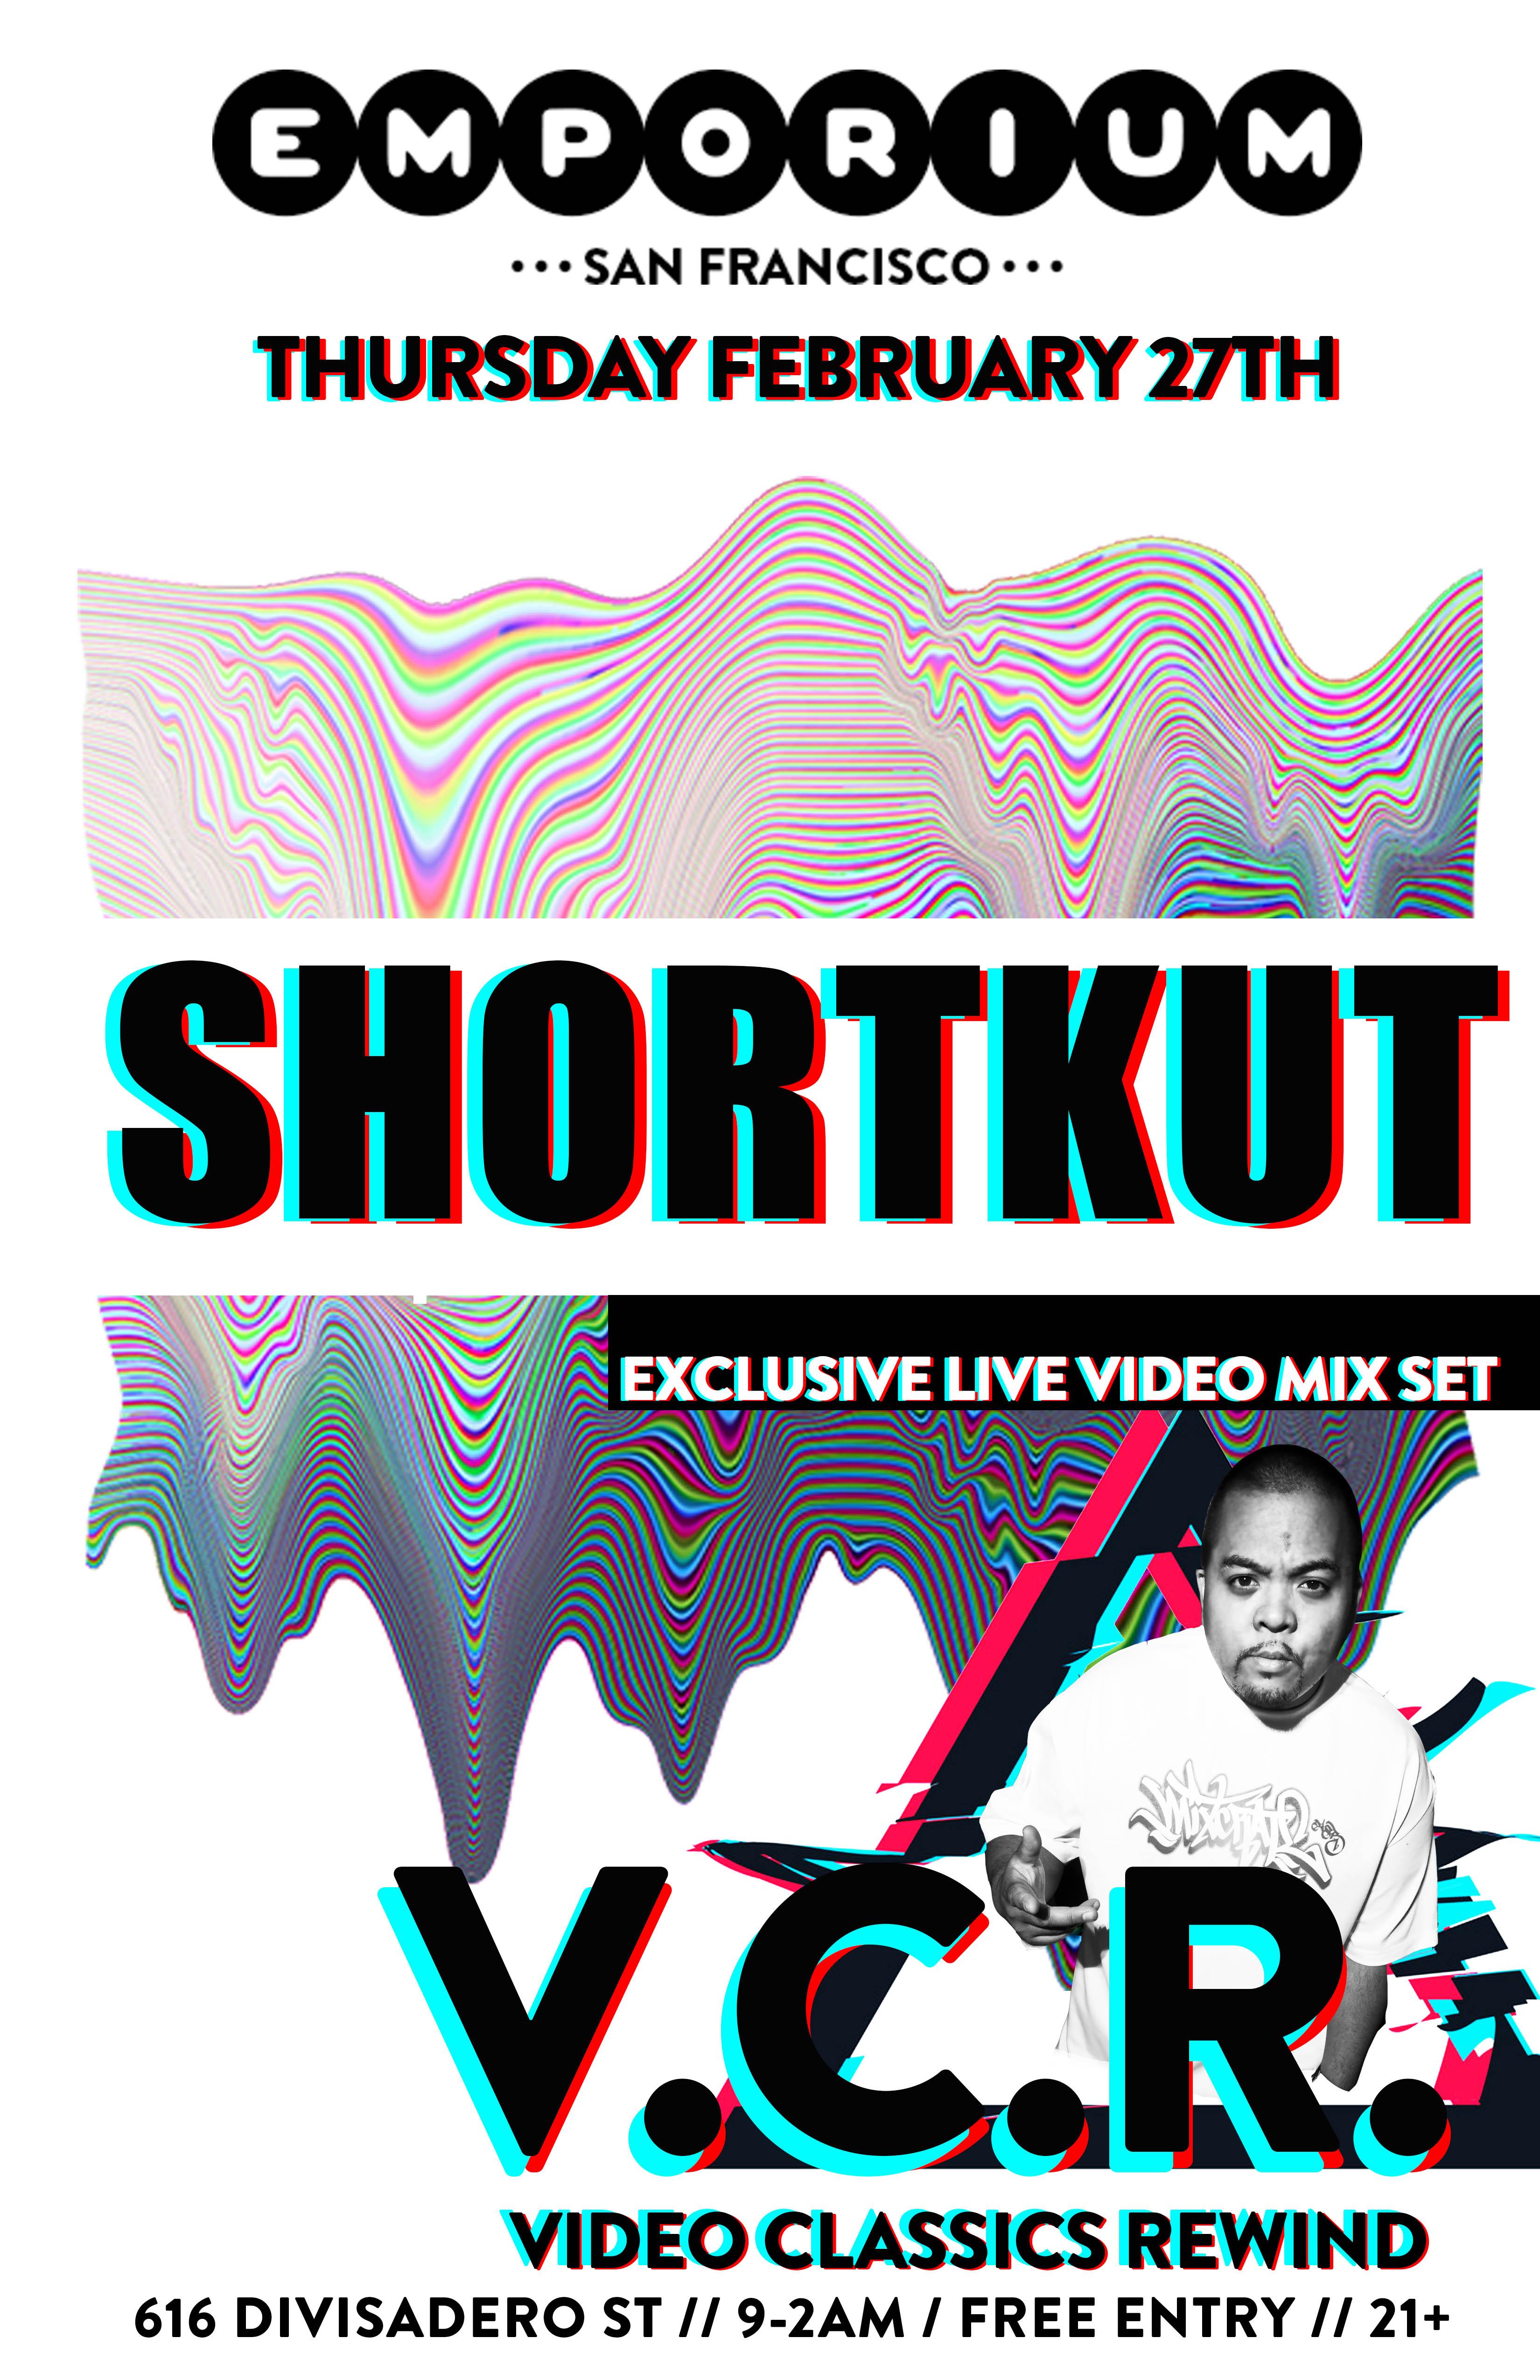 DJ SHORTKUT presents V.C.R. at EMPORIUM SF